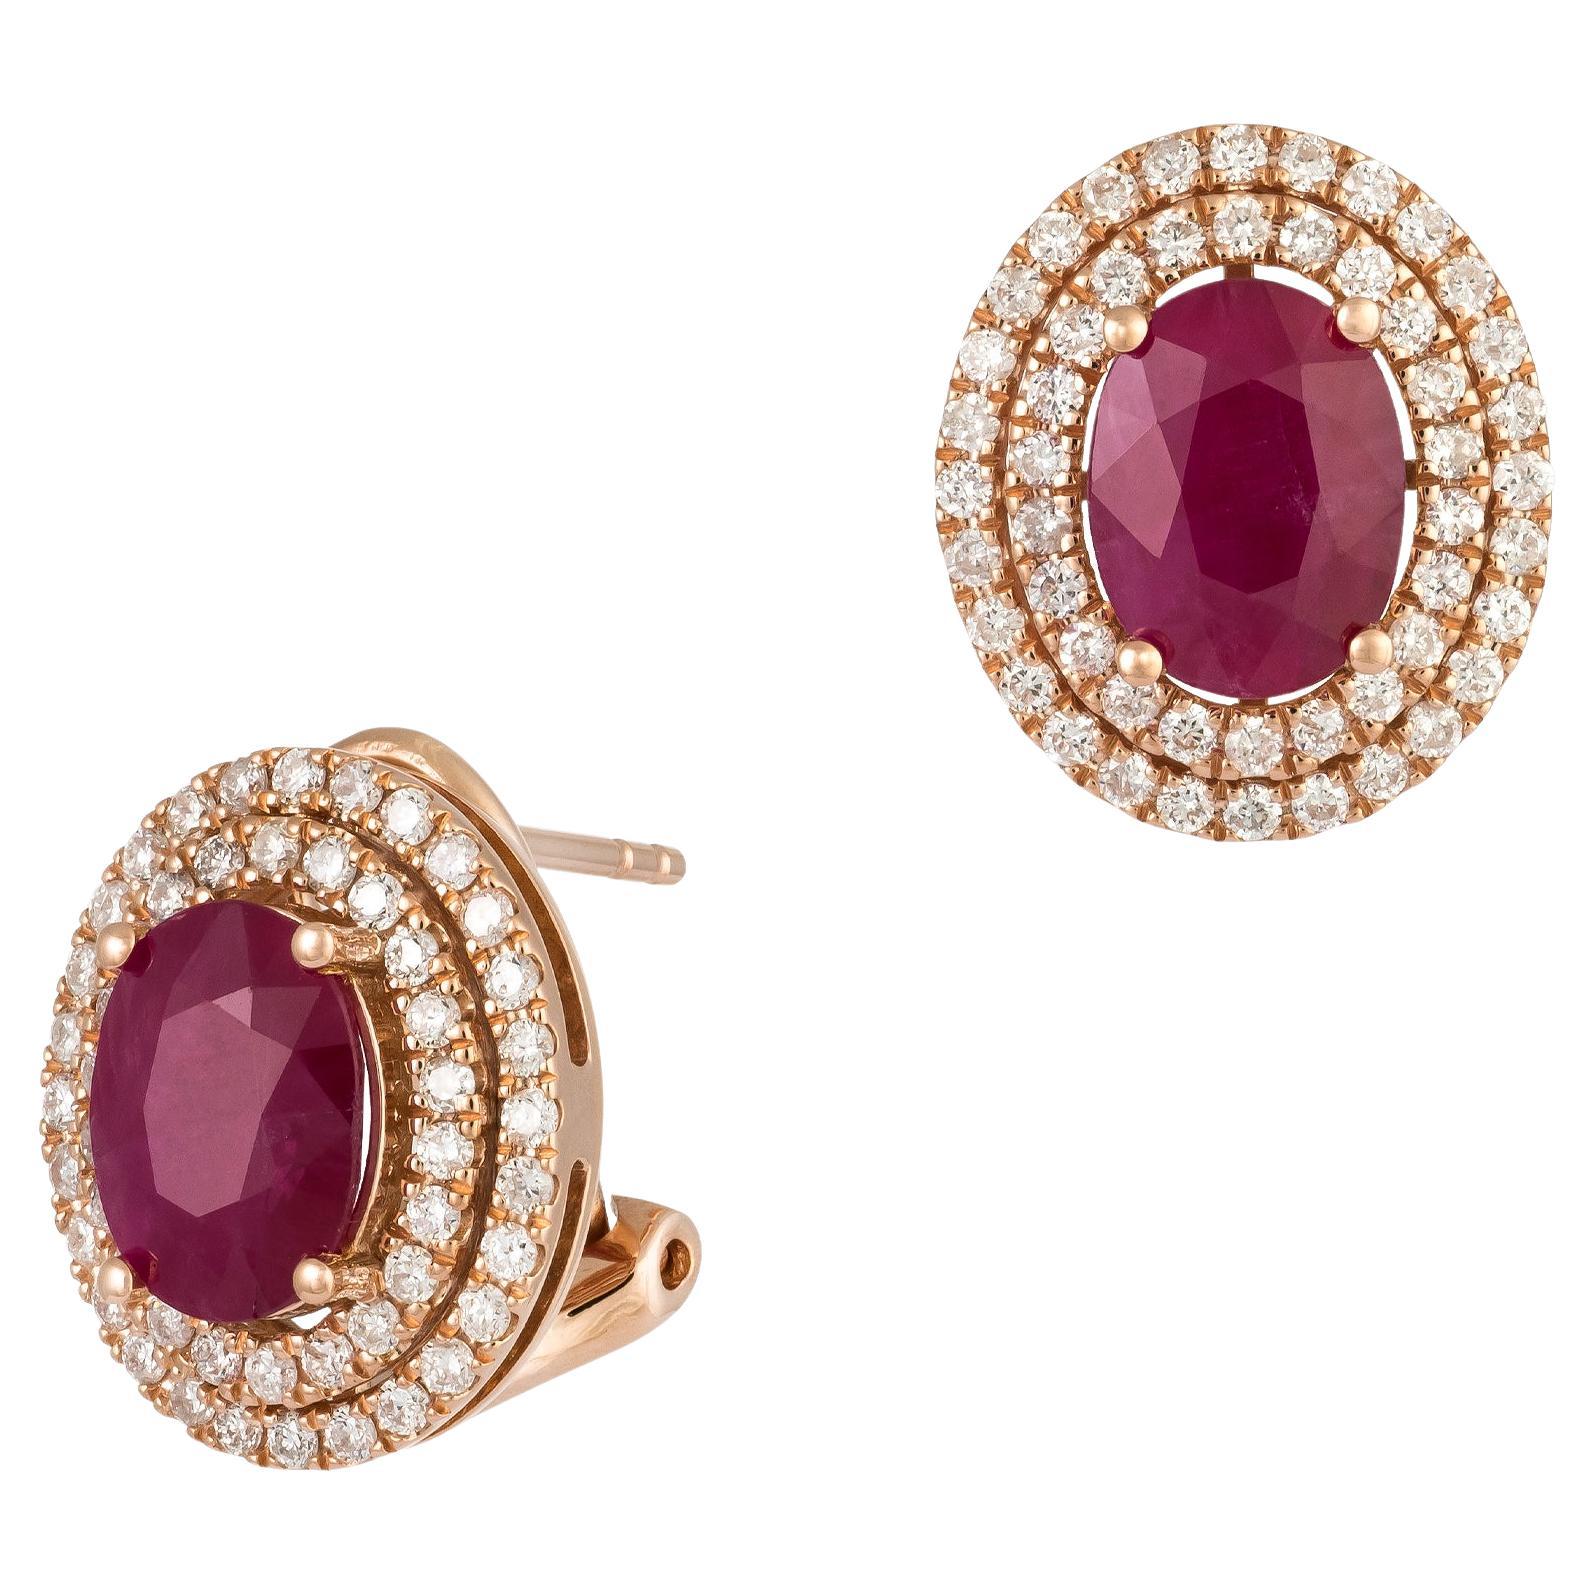 Modern Pink Gold 18K Earrings Ruby Diamond For Her For Sale